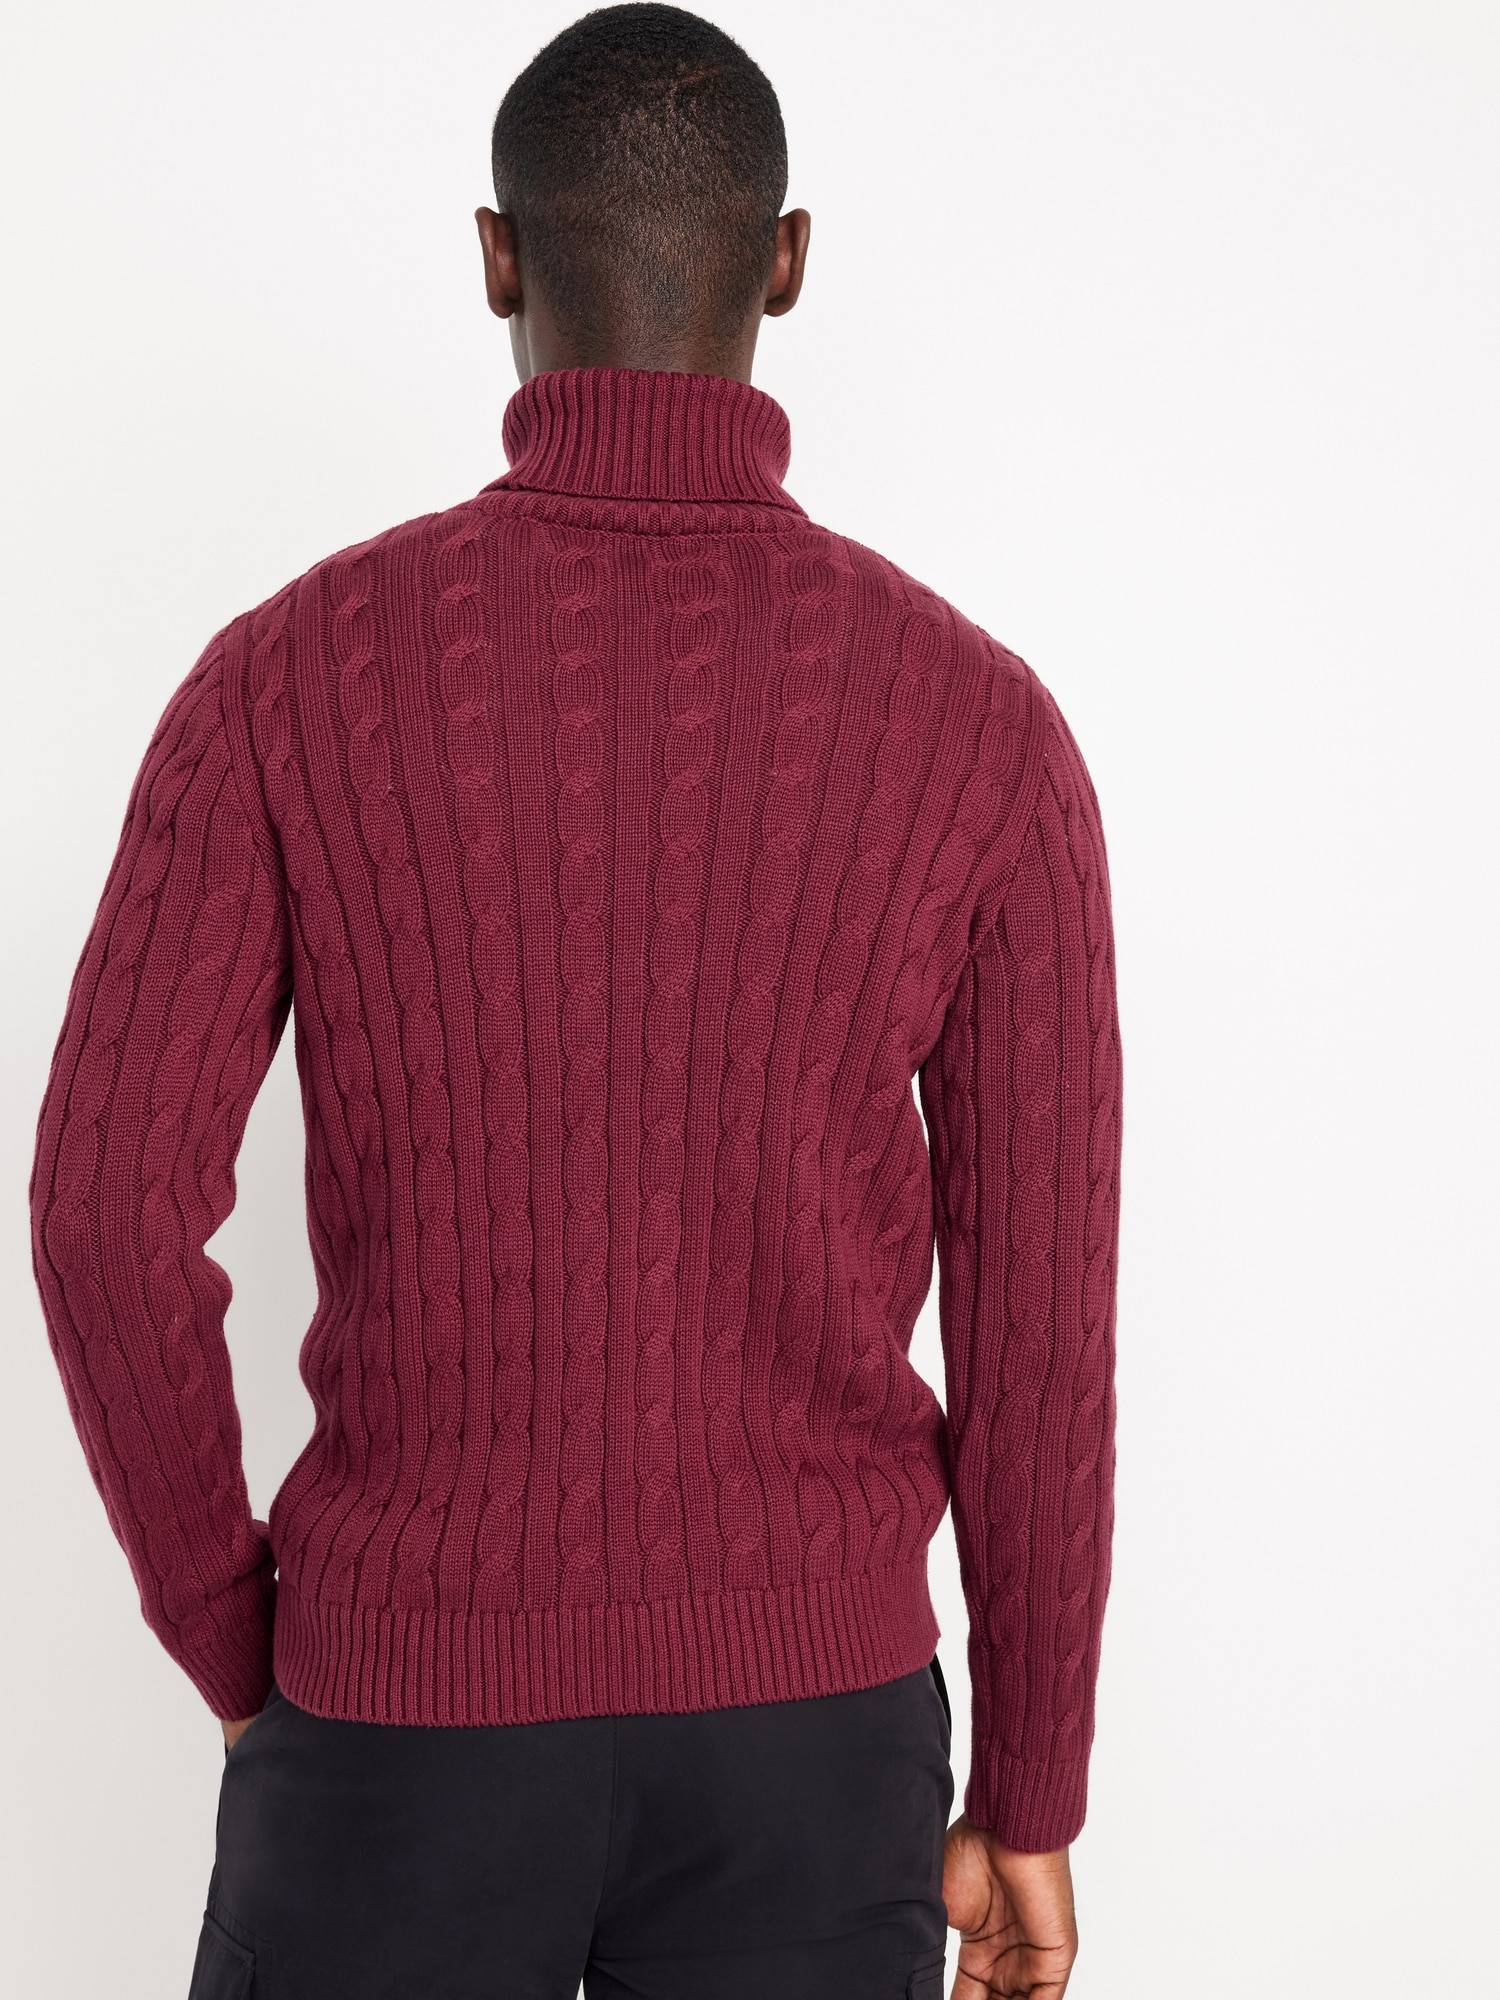 Shaker-Stitch Turtleneck Sweater for Men | Old Navy